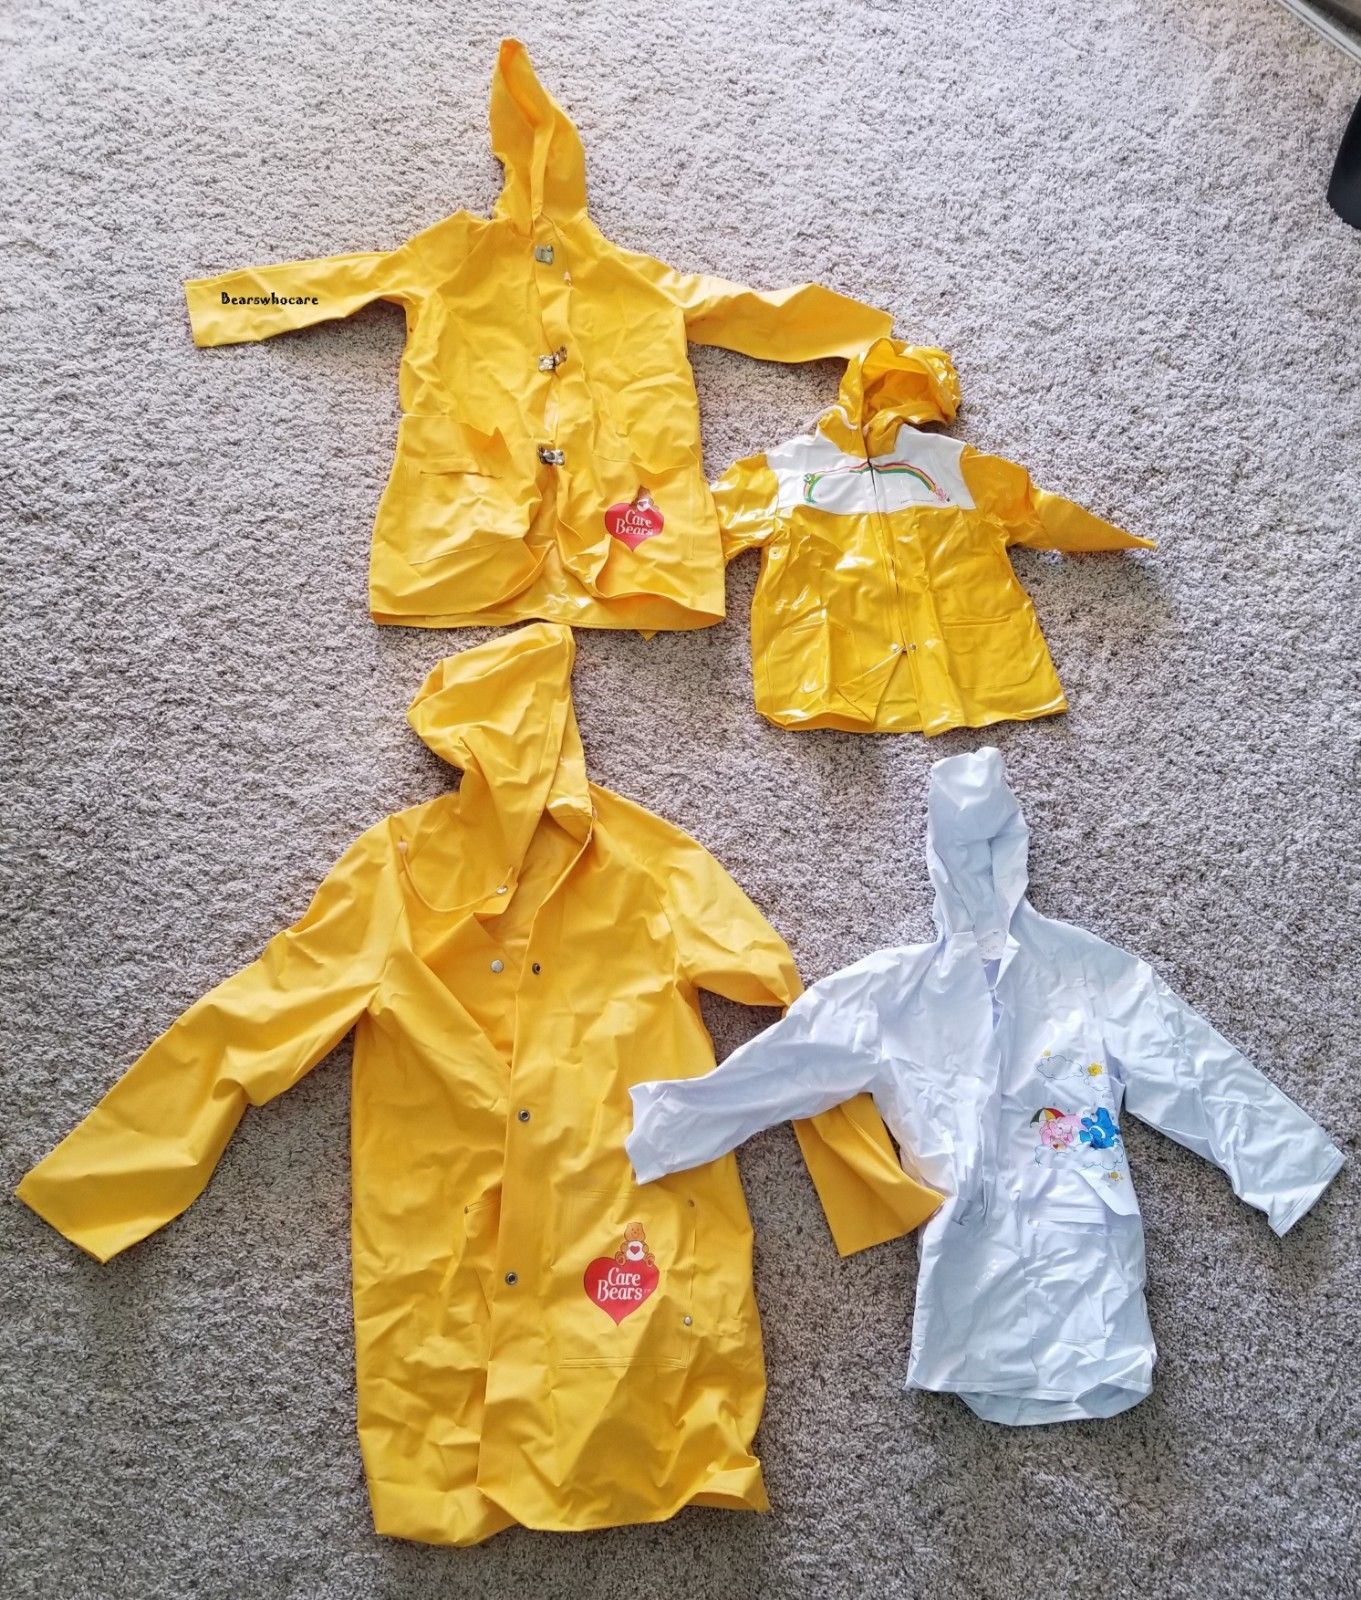 Care Bears Plastic Raincoats sizes children 3, 4, 6X, L14, 1982-84